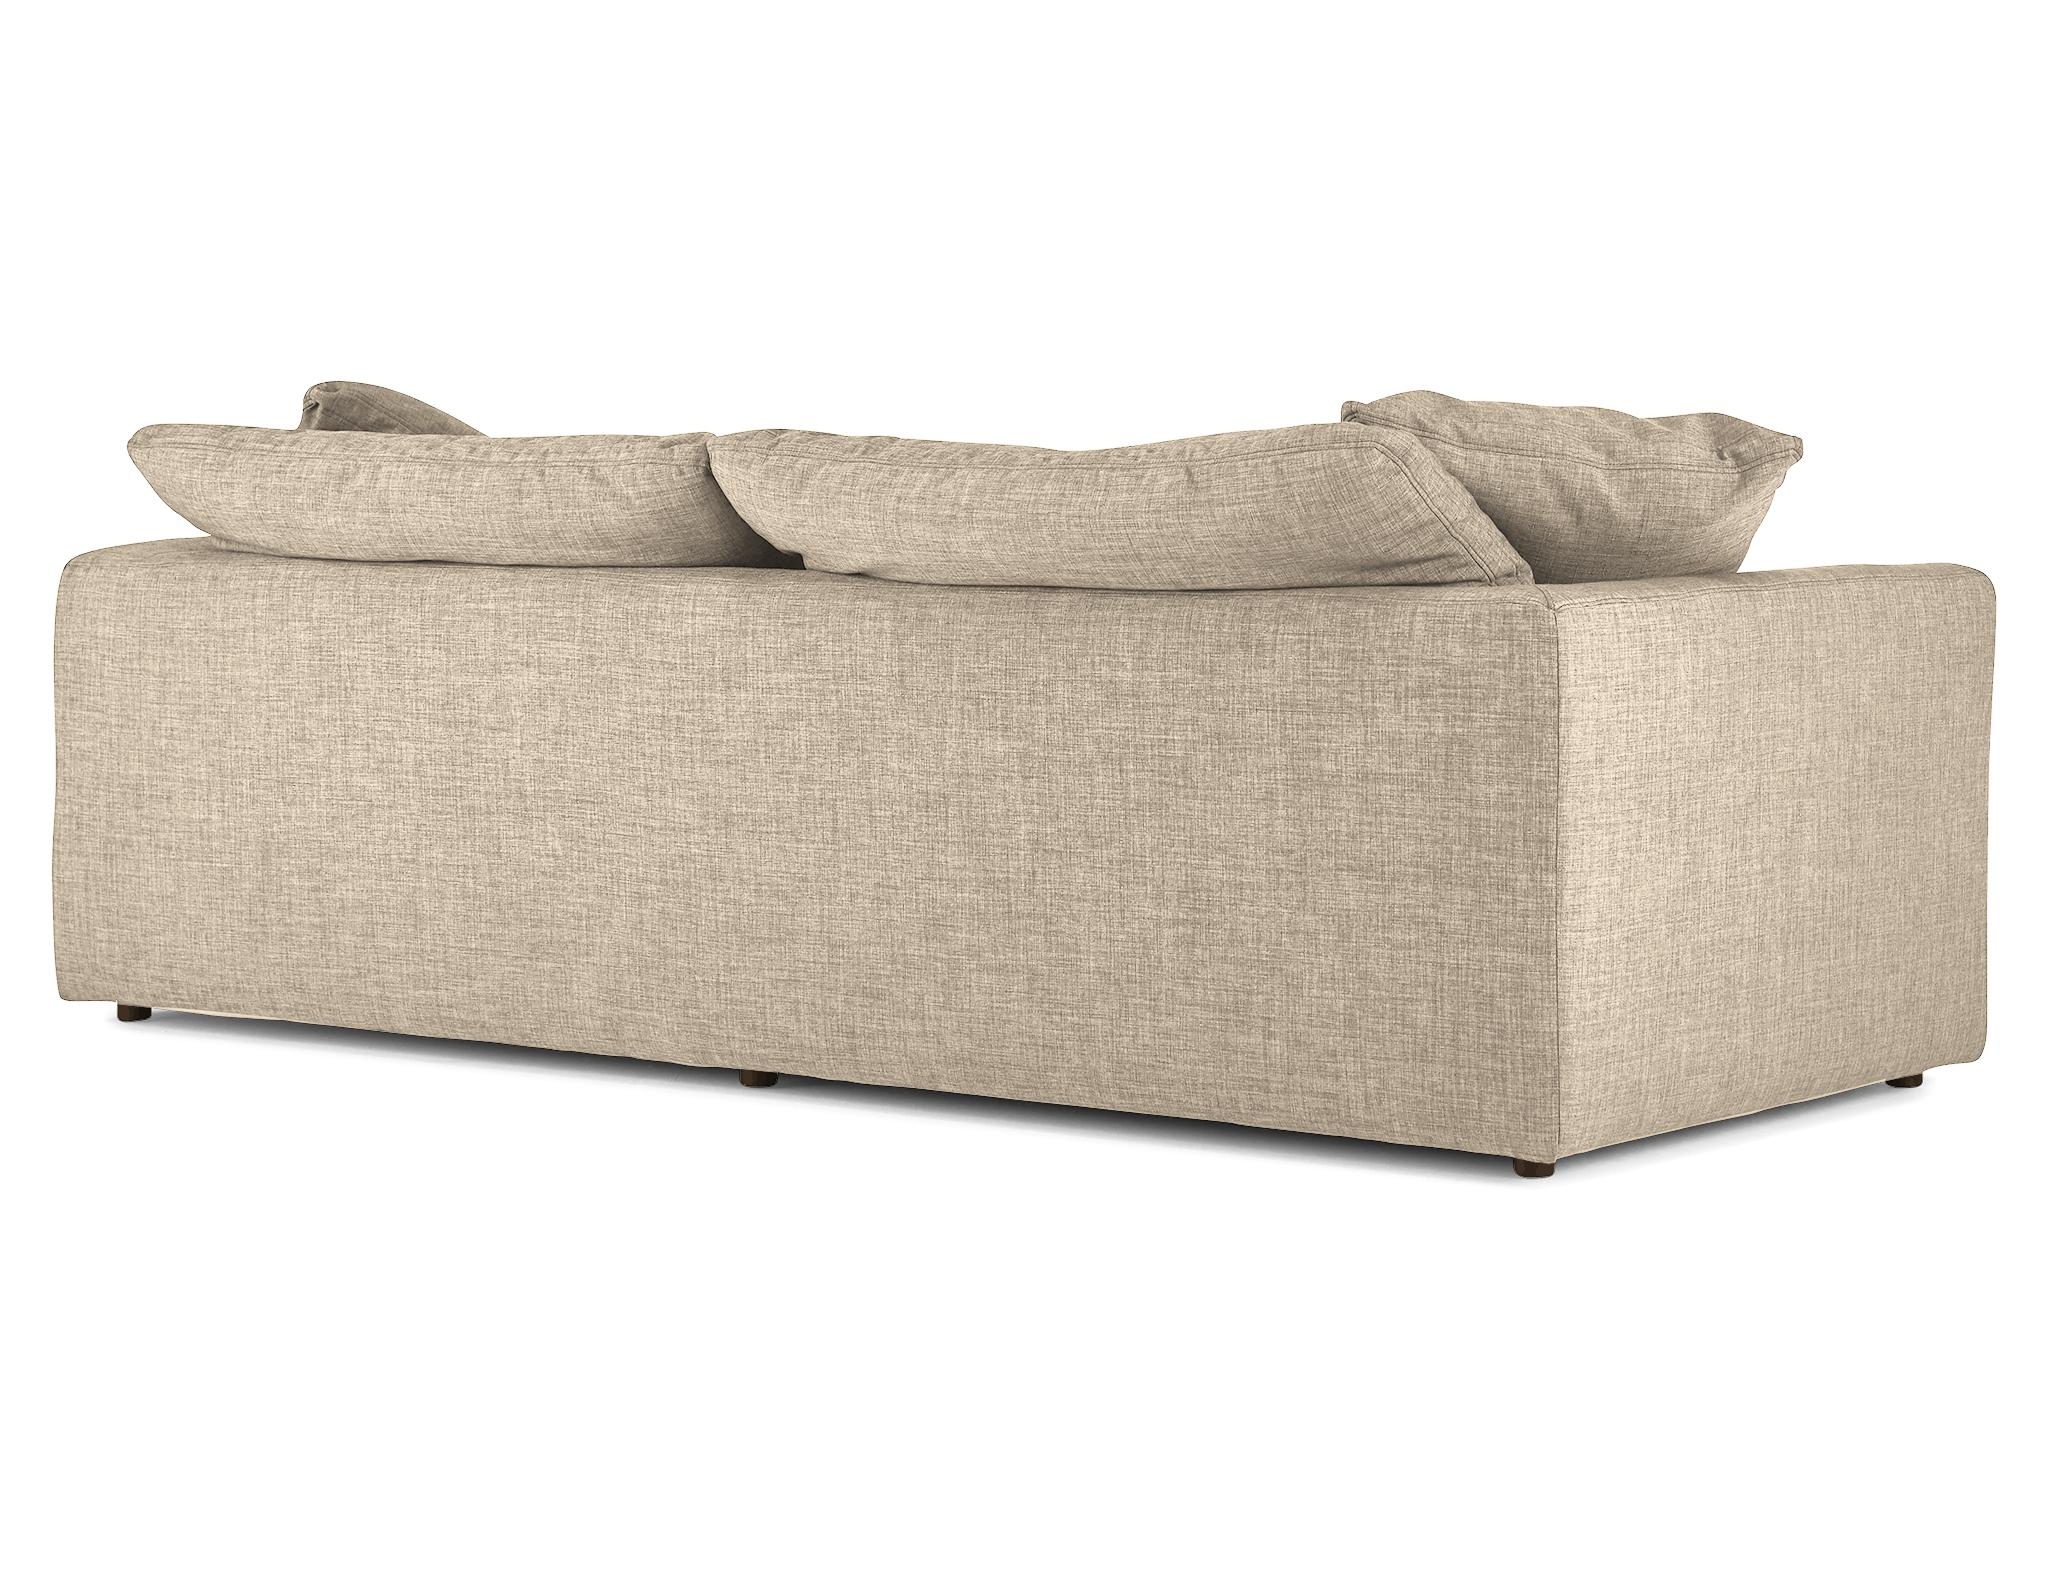 Beige/White Bryant Mid Century Modern Sofa - Cody Sandstone - Image 3